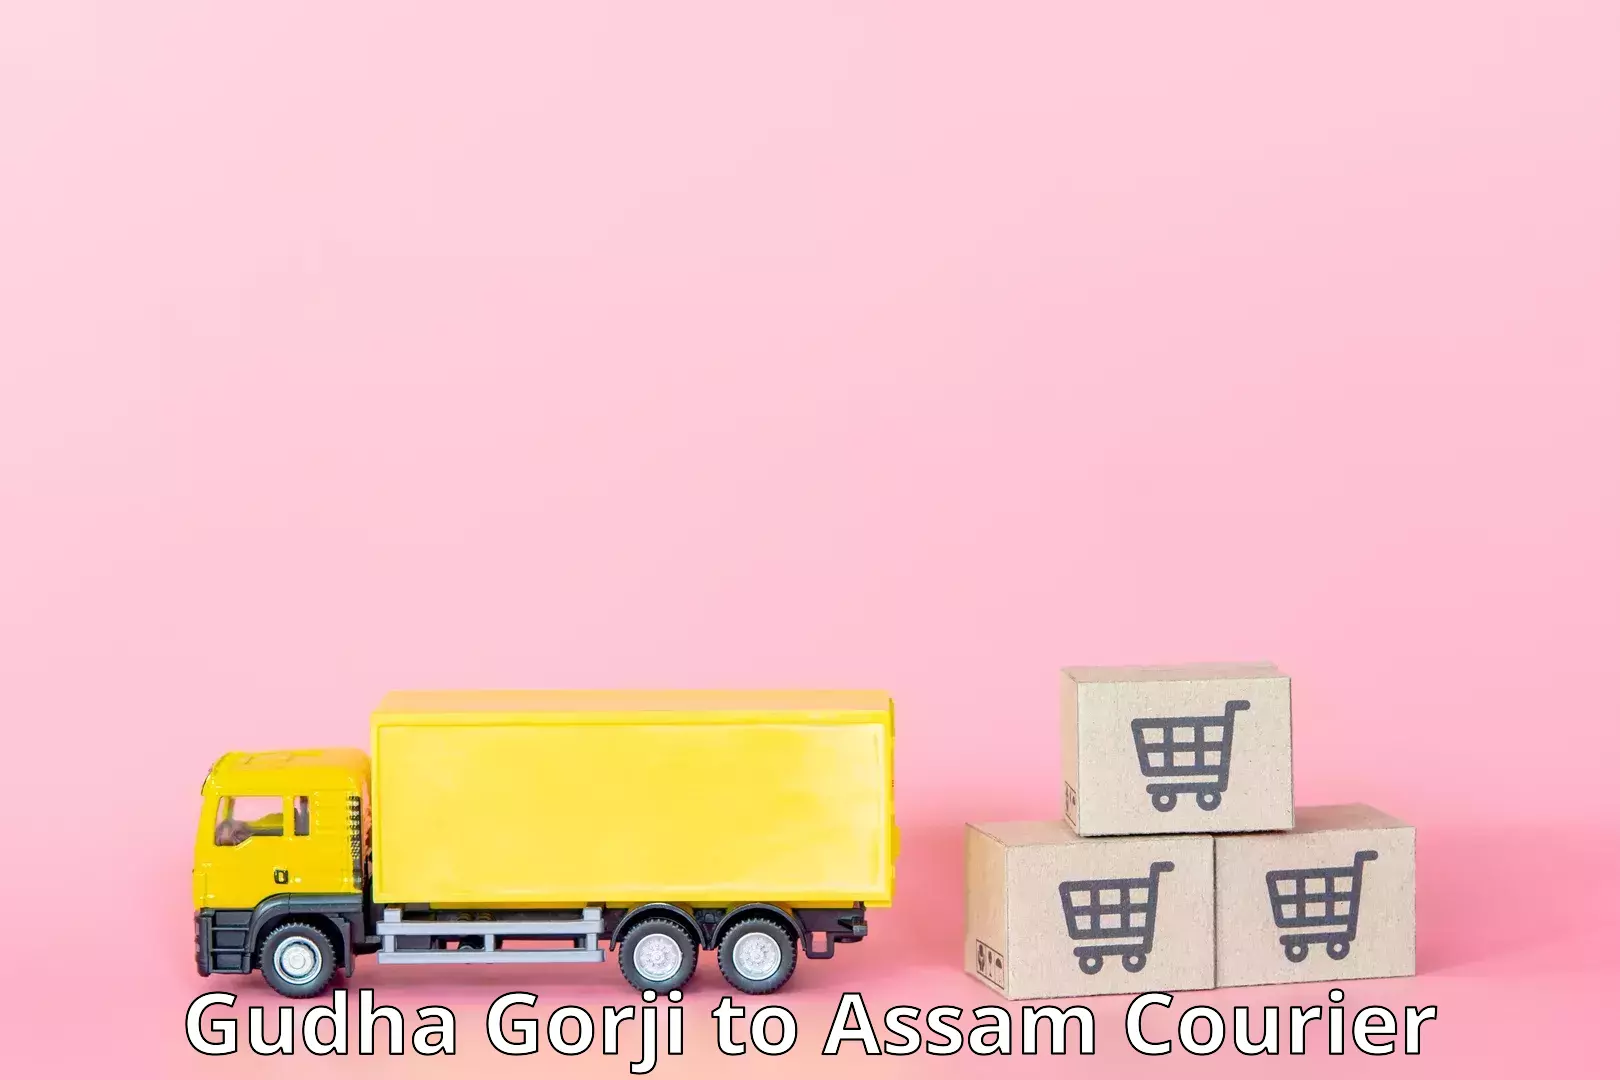 Nationwide delivery network Gudha Gorji to Assam